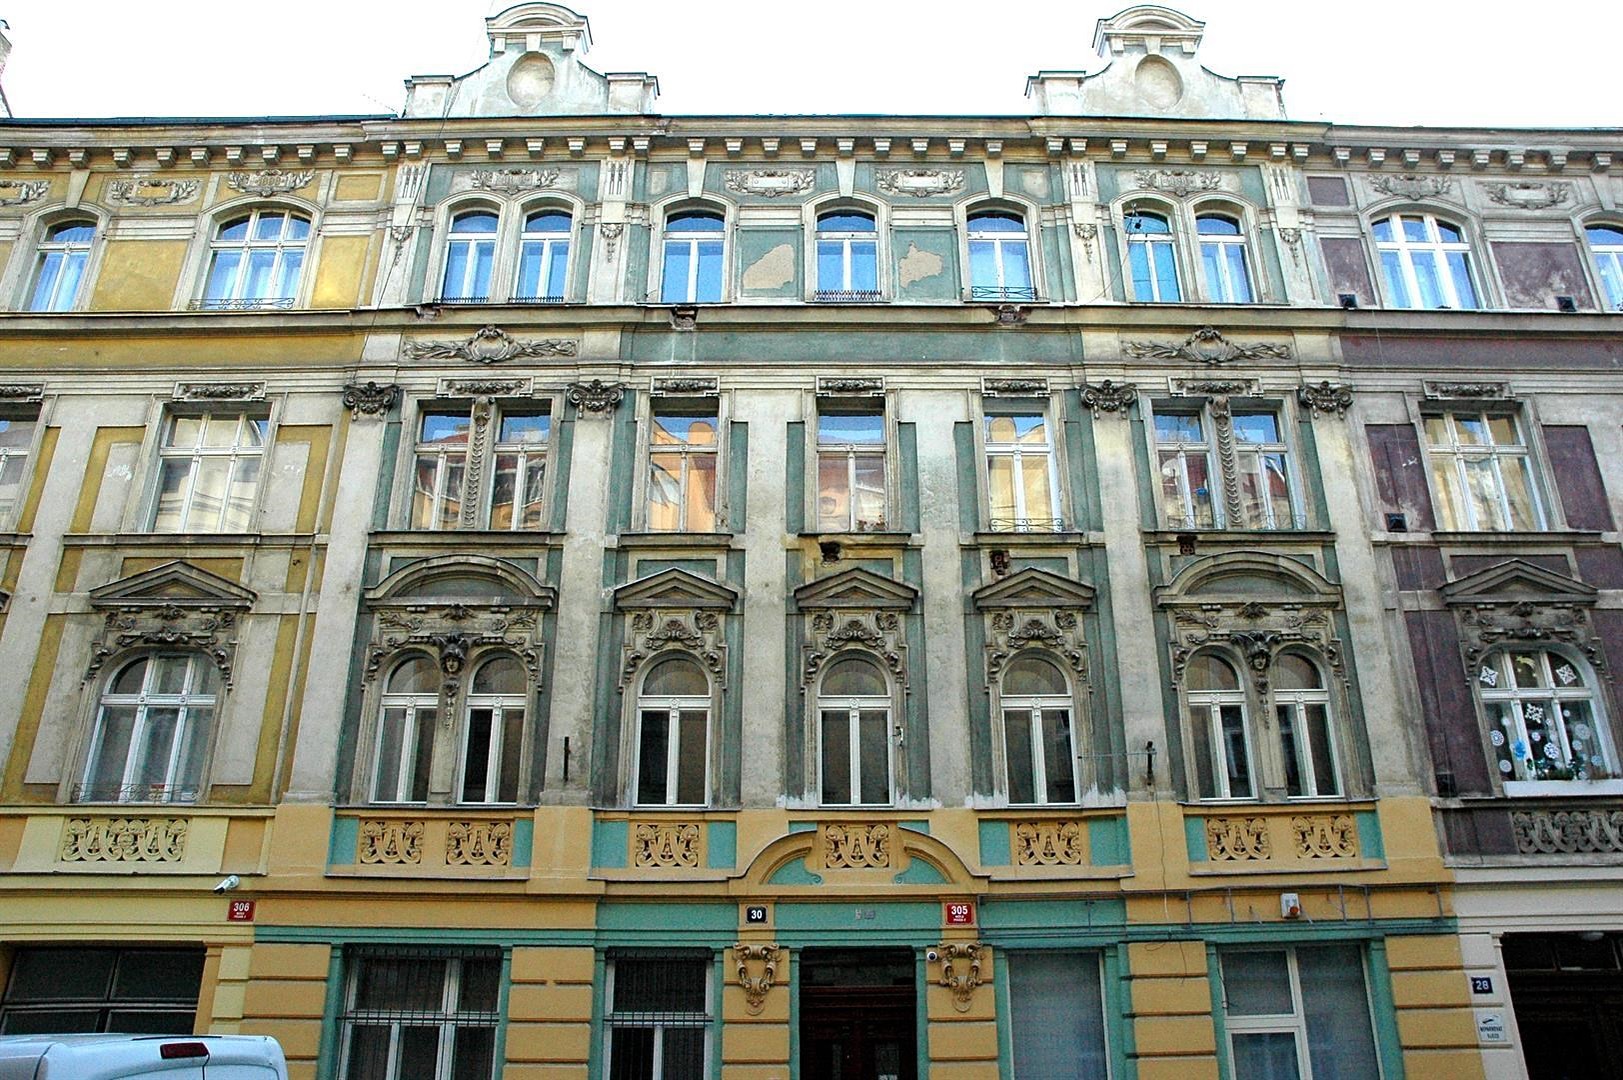 Pronájem bytu 1+1 65 m² (Mezonet), Oldřichova, Praha 2 - Nusle